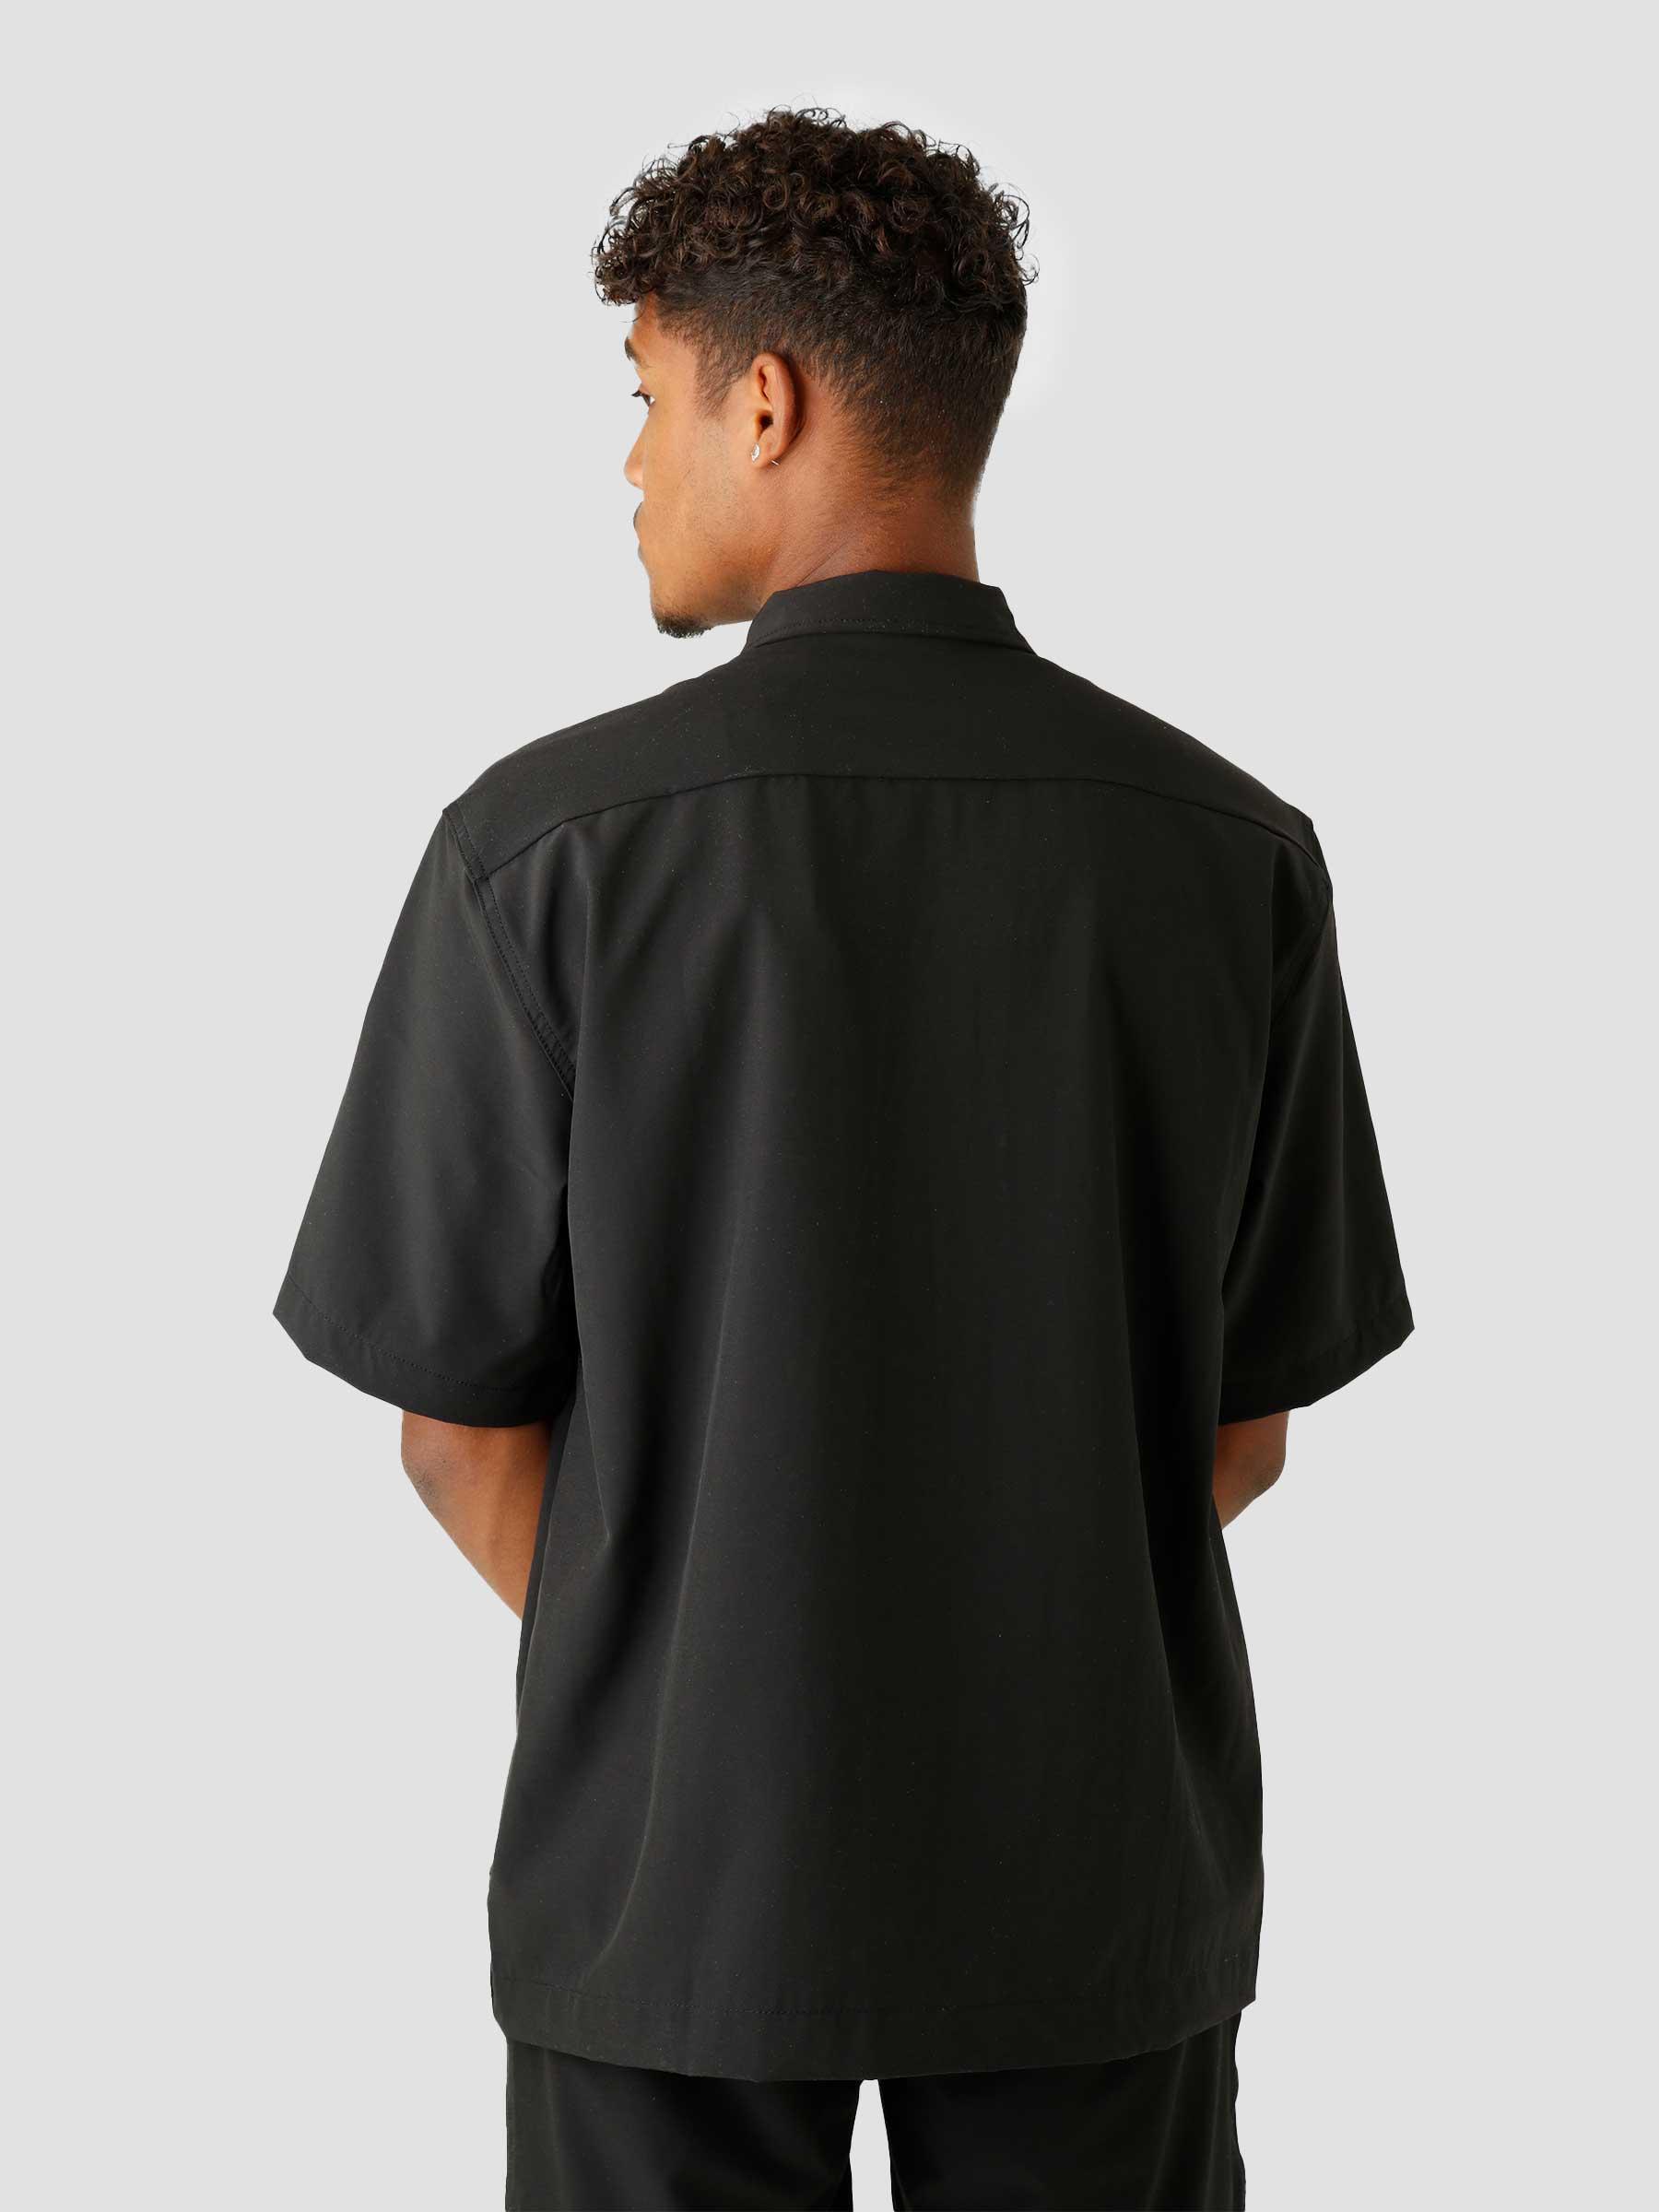 X O'Neill Hybrid Shirt Black Out 2650020